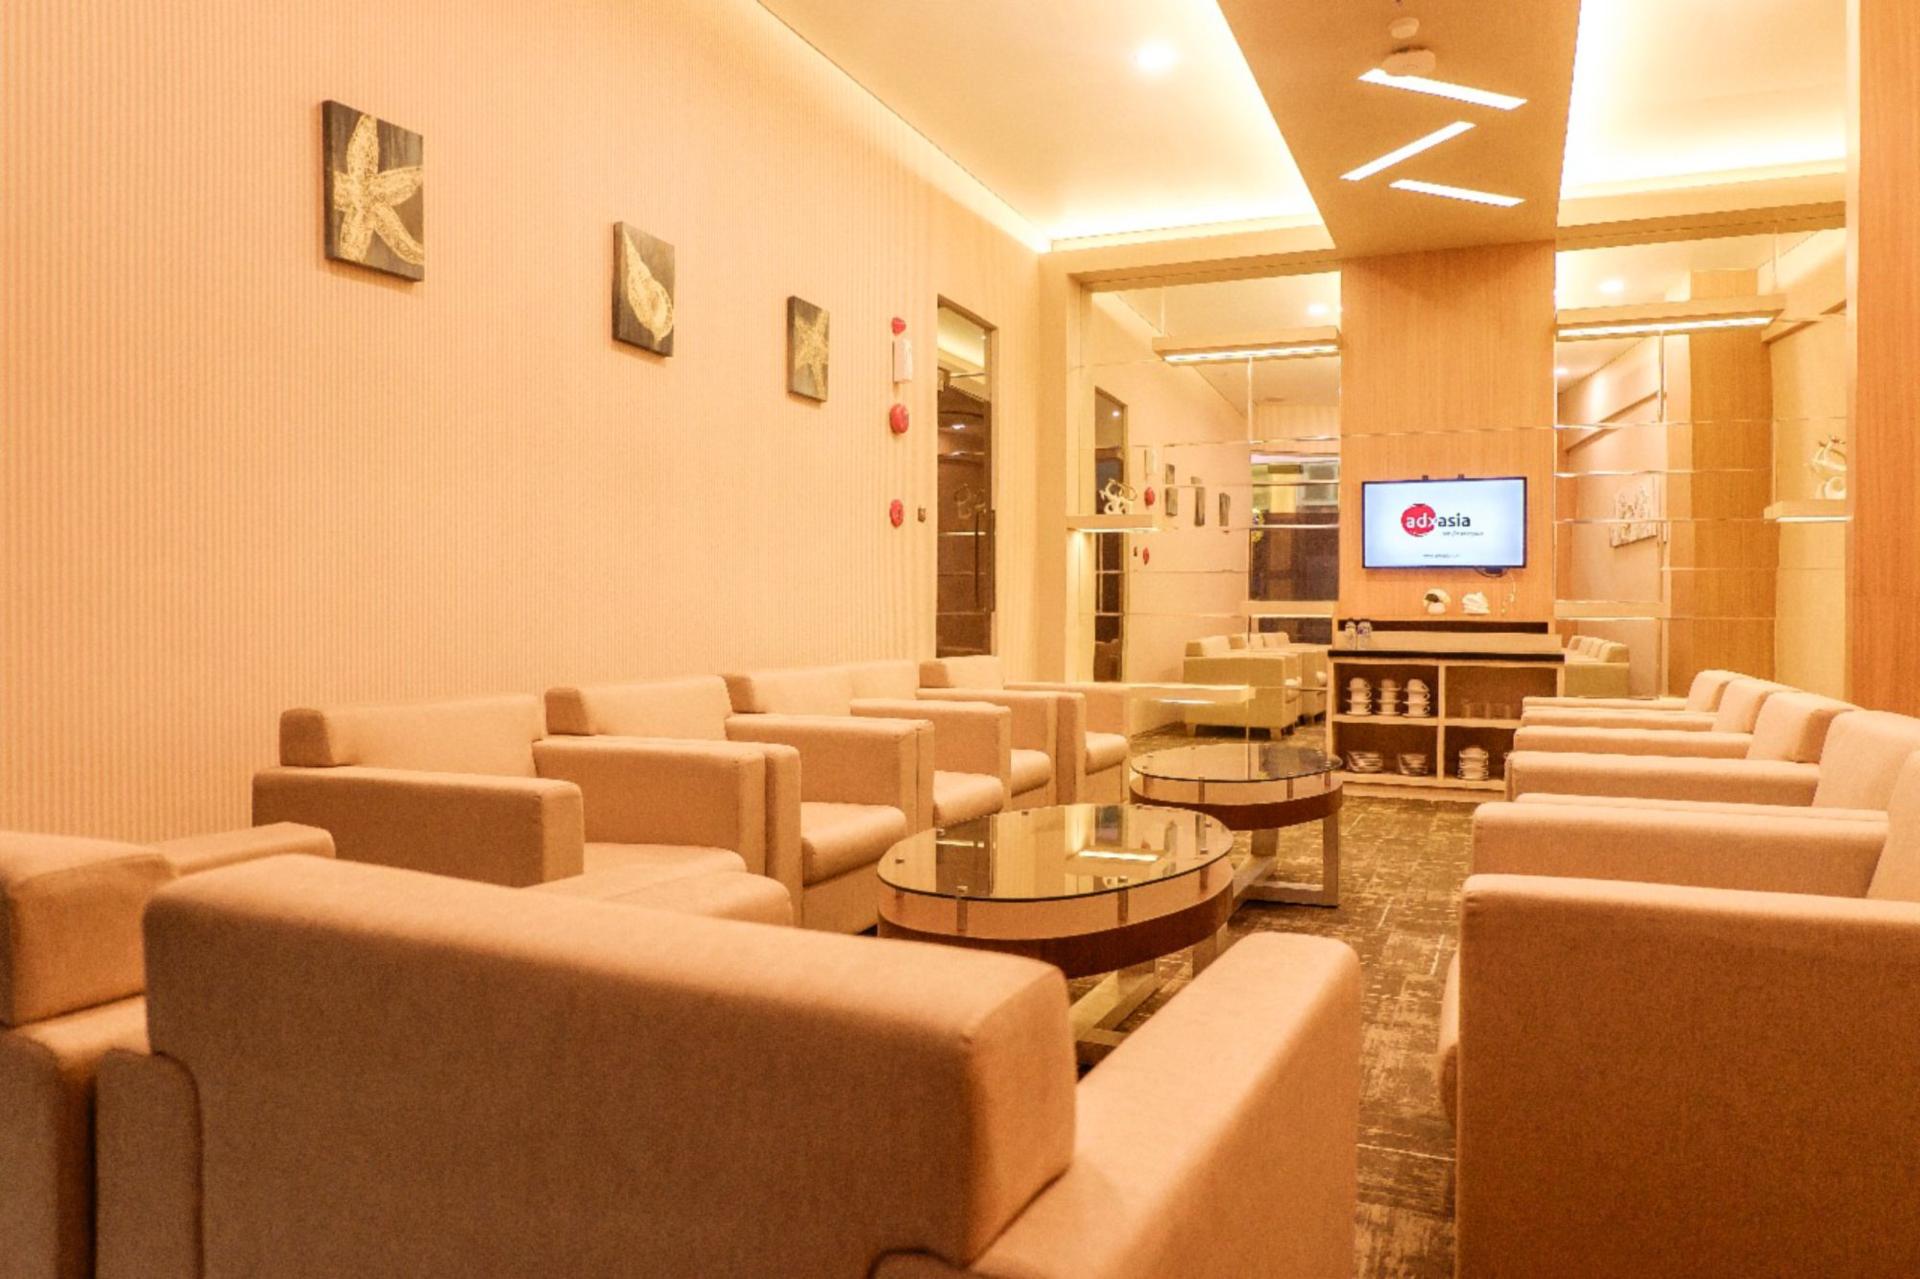 Concordia Premier Lounge image 4 of 18